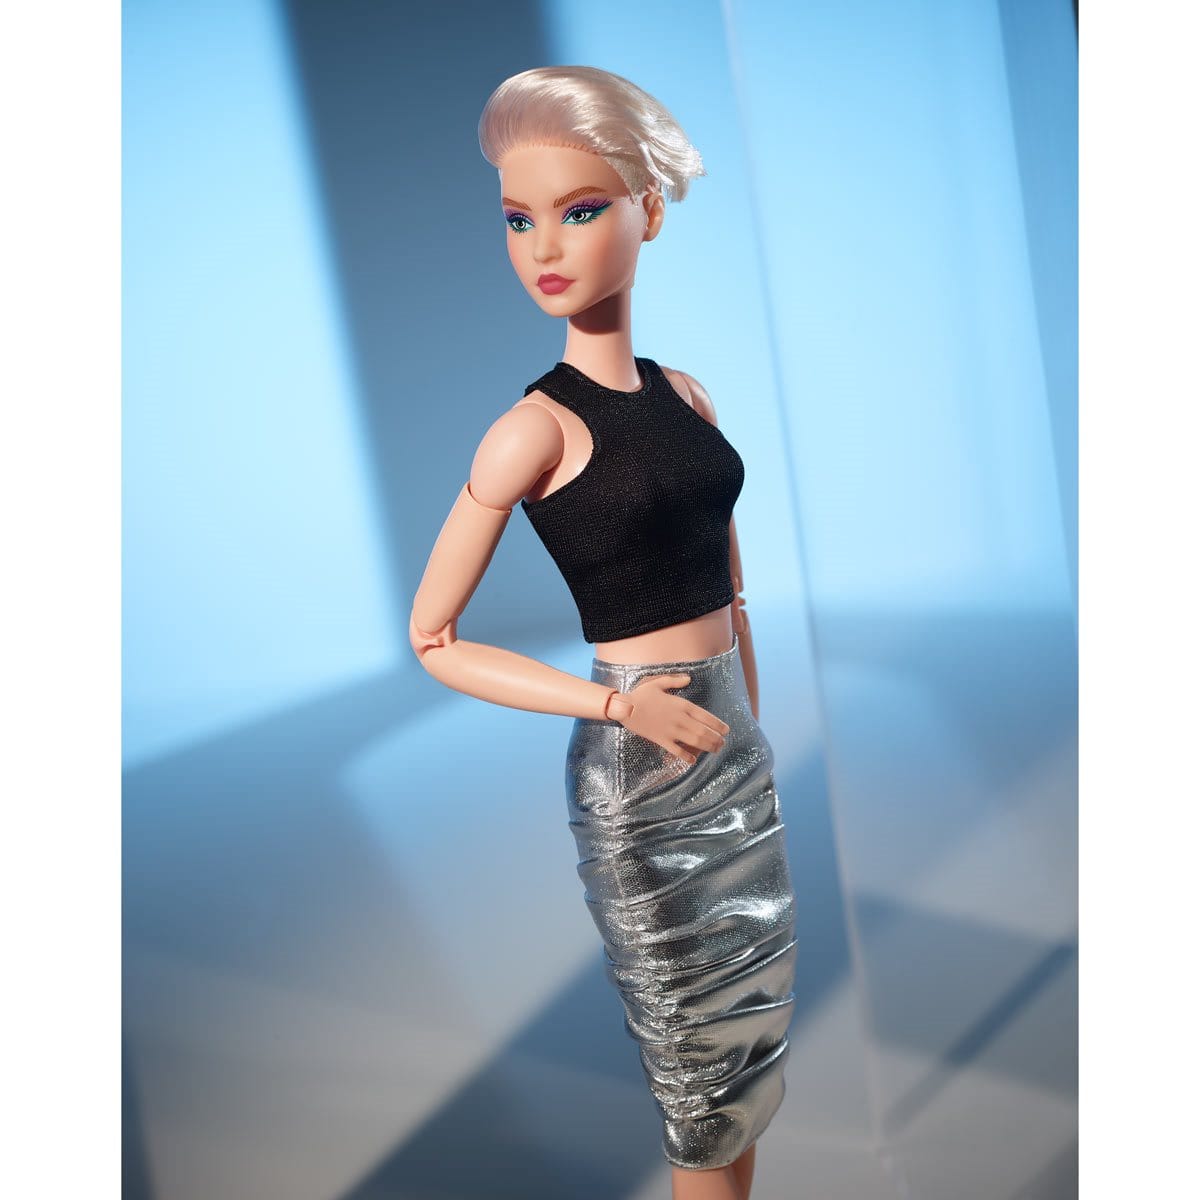 Barbie Looks Doll (Original, Blonde Pixie Cut)